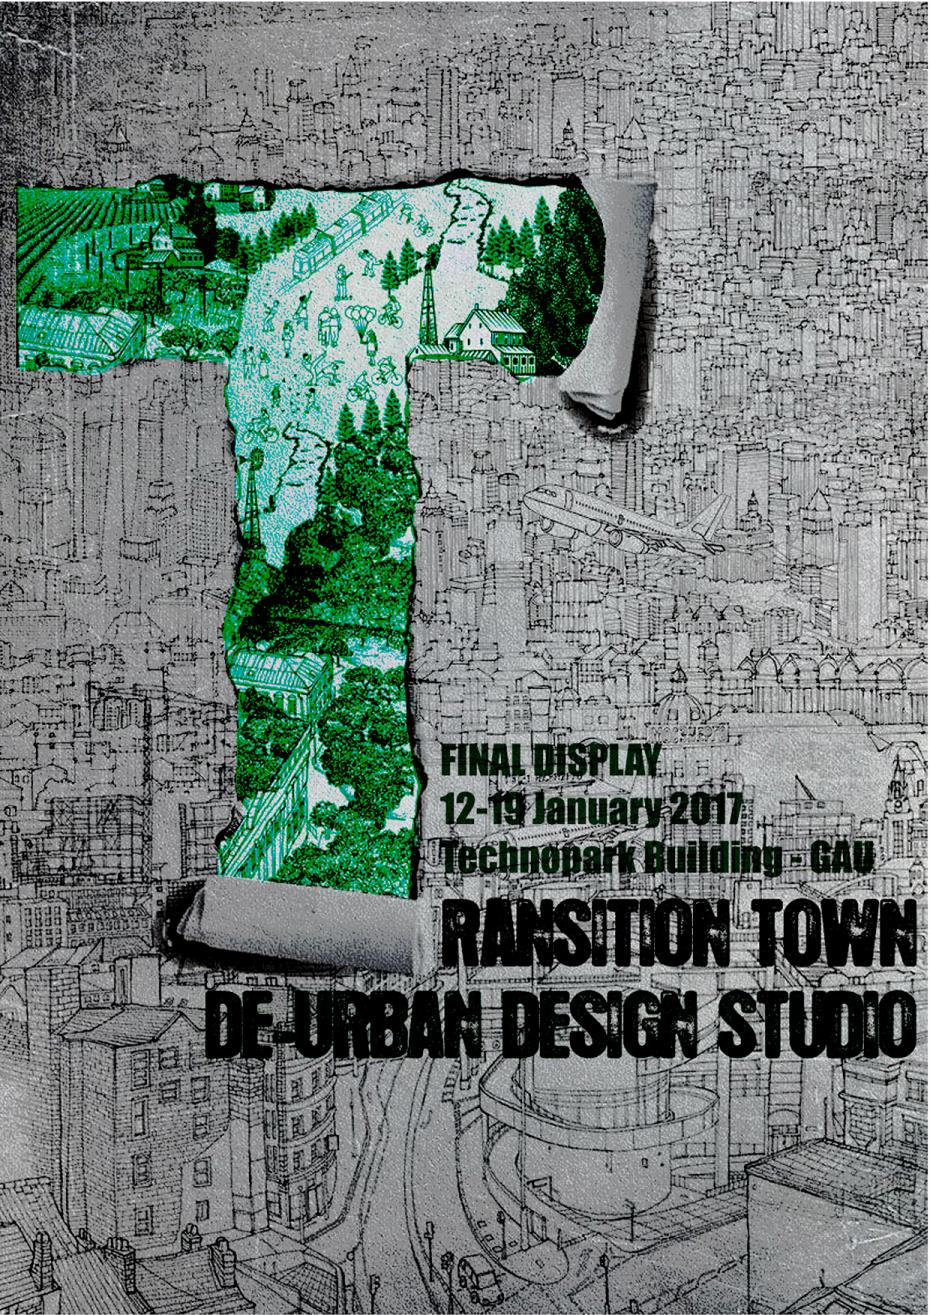 RANSITION TOWN DE-URBAN DESIGN STUDIO